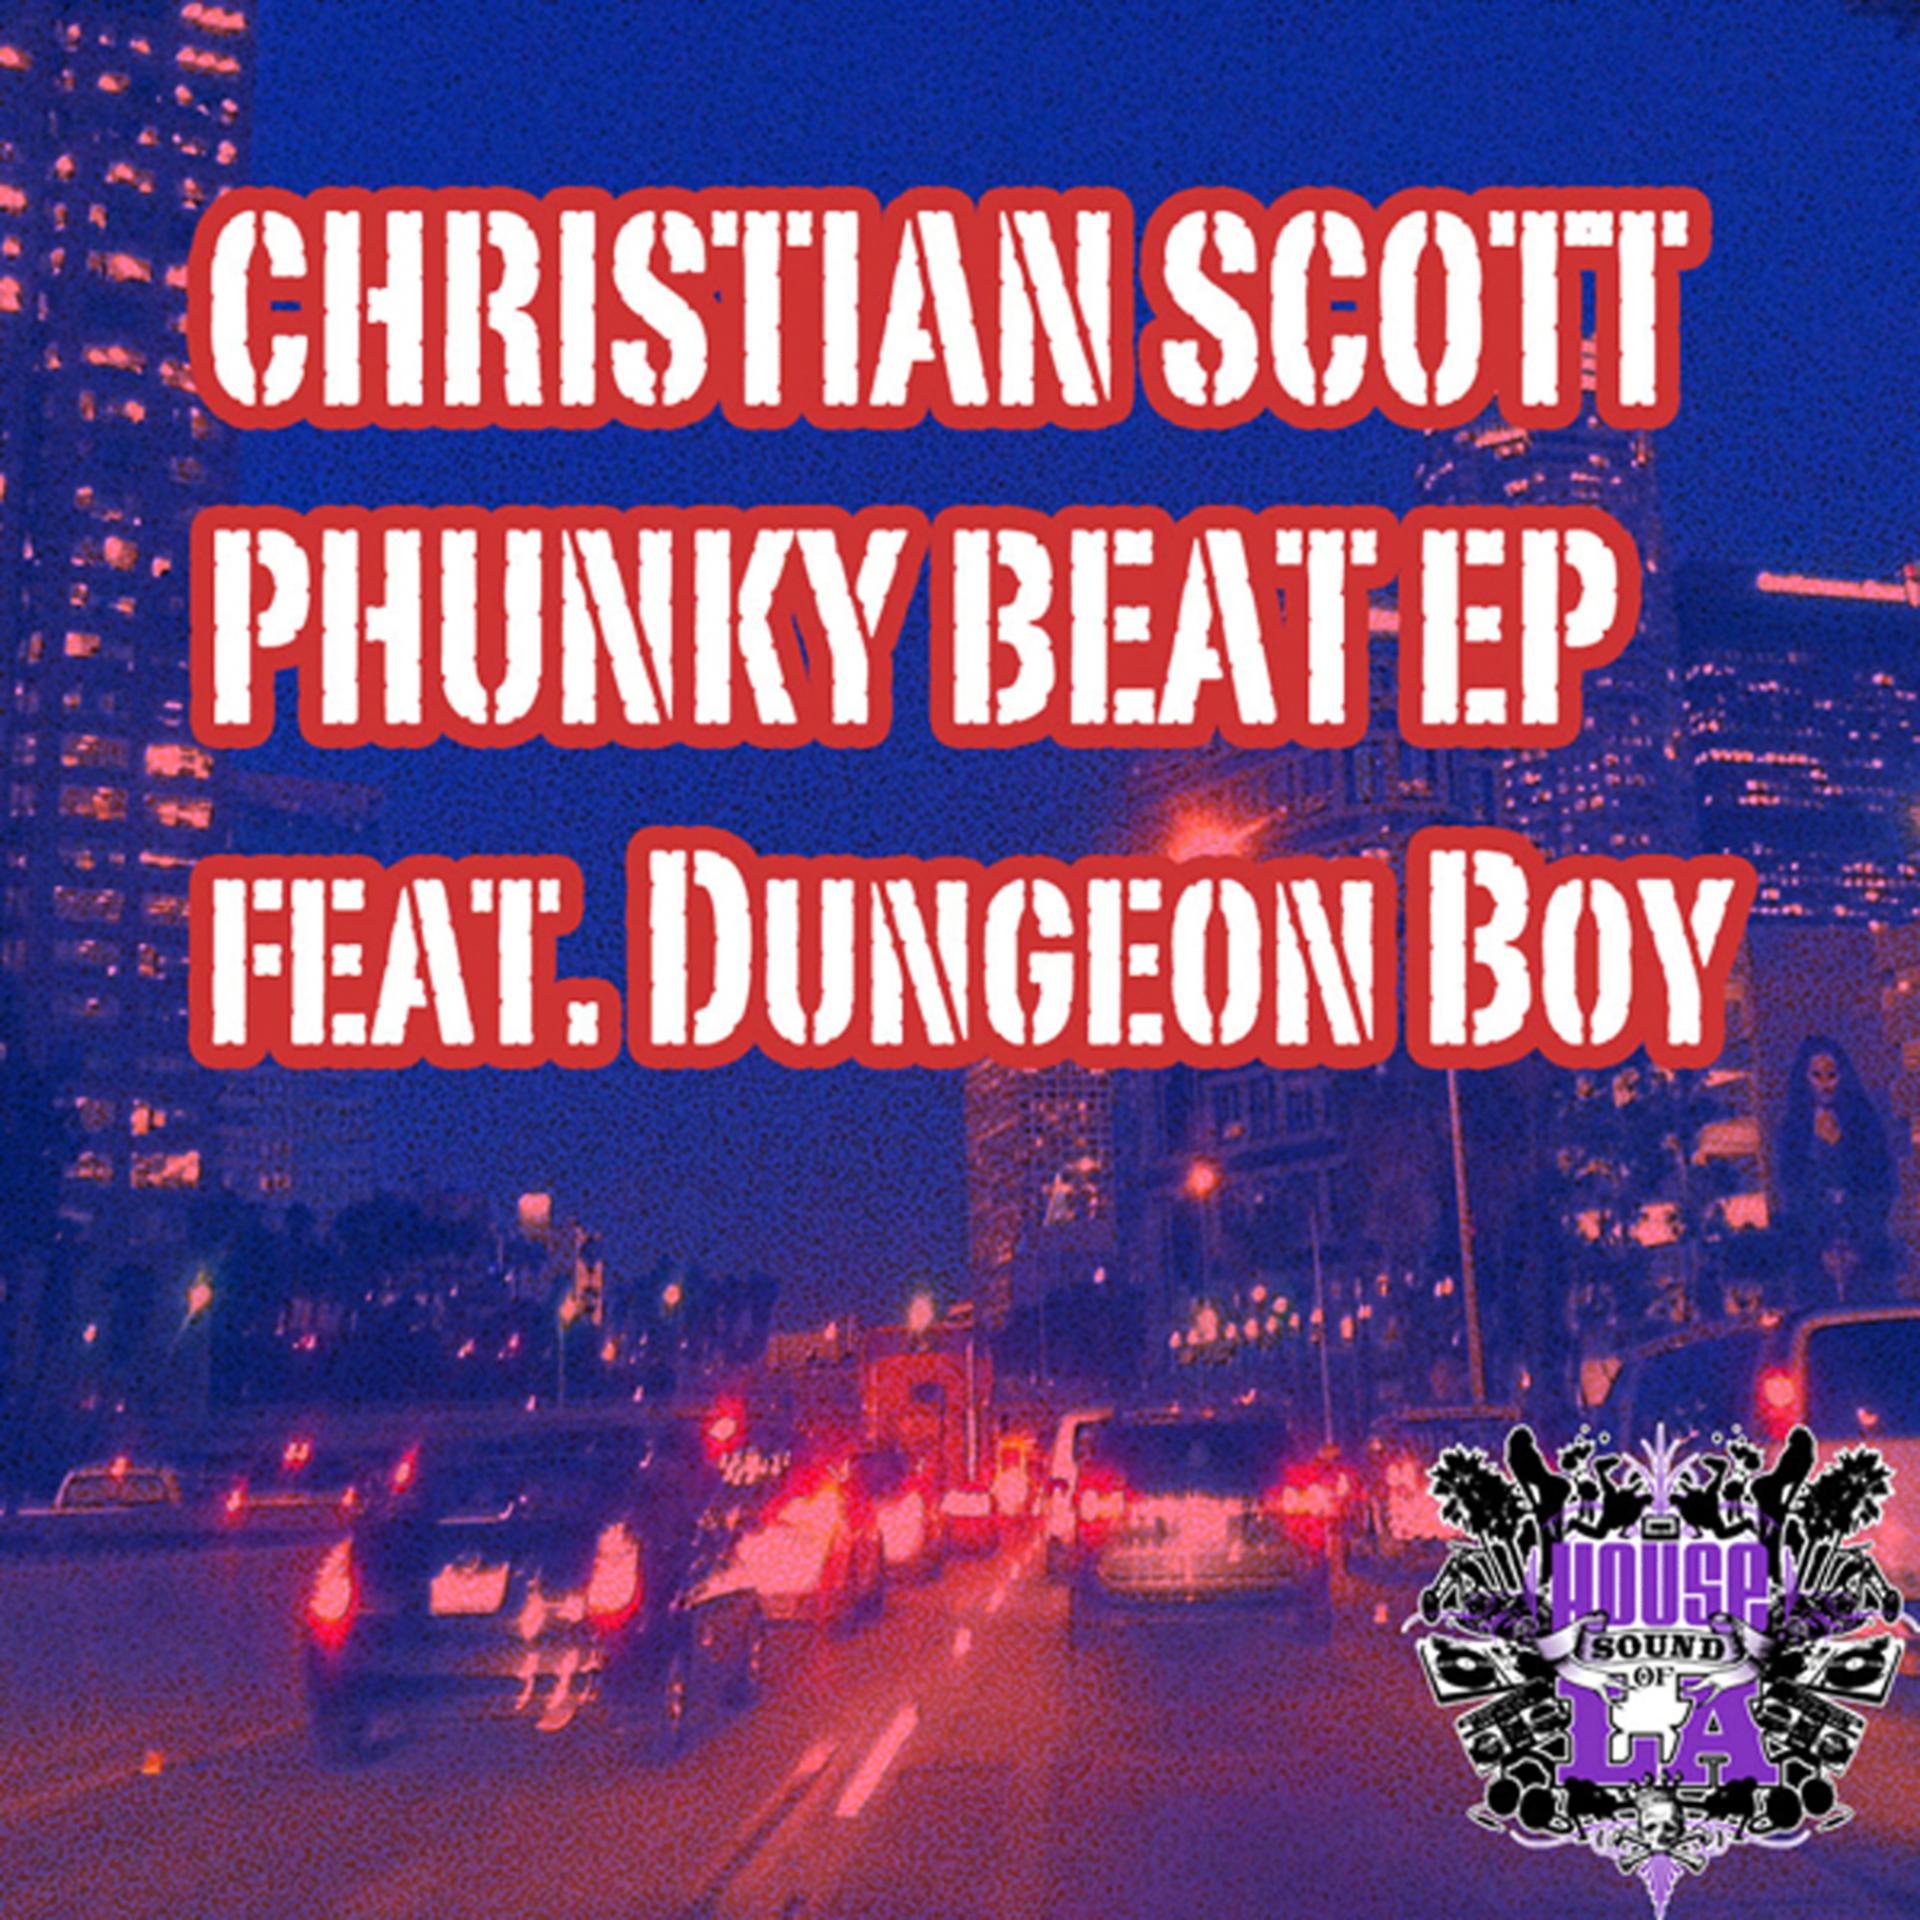 Постер к треку Dungeon Boy, Christian Scott - Put On The Phunky Beat (Christian Scott Mix)